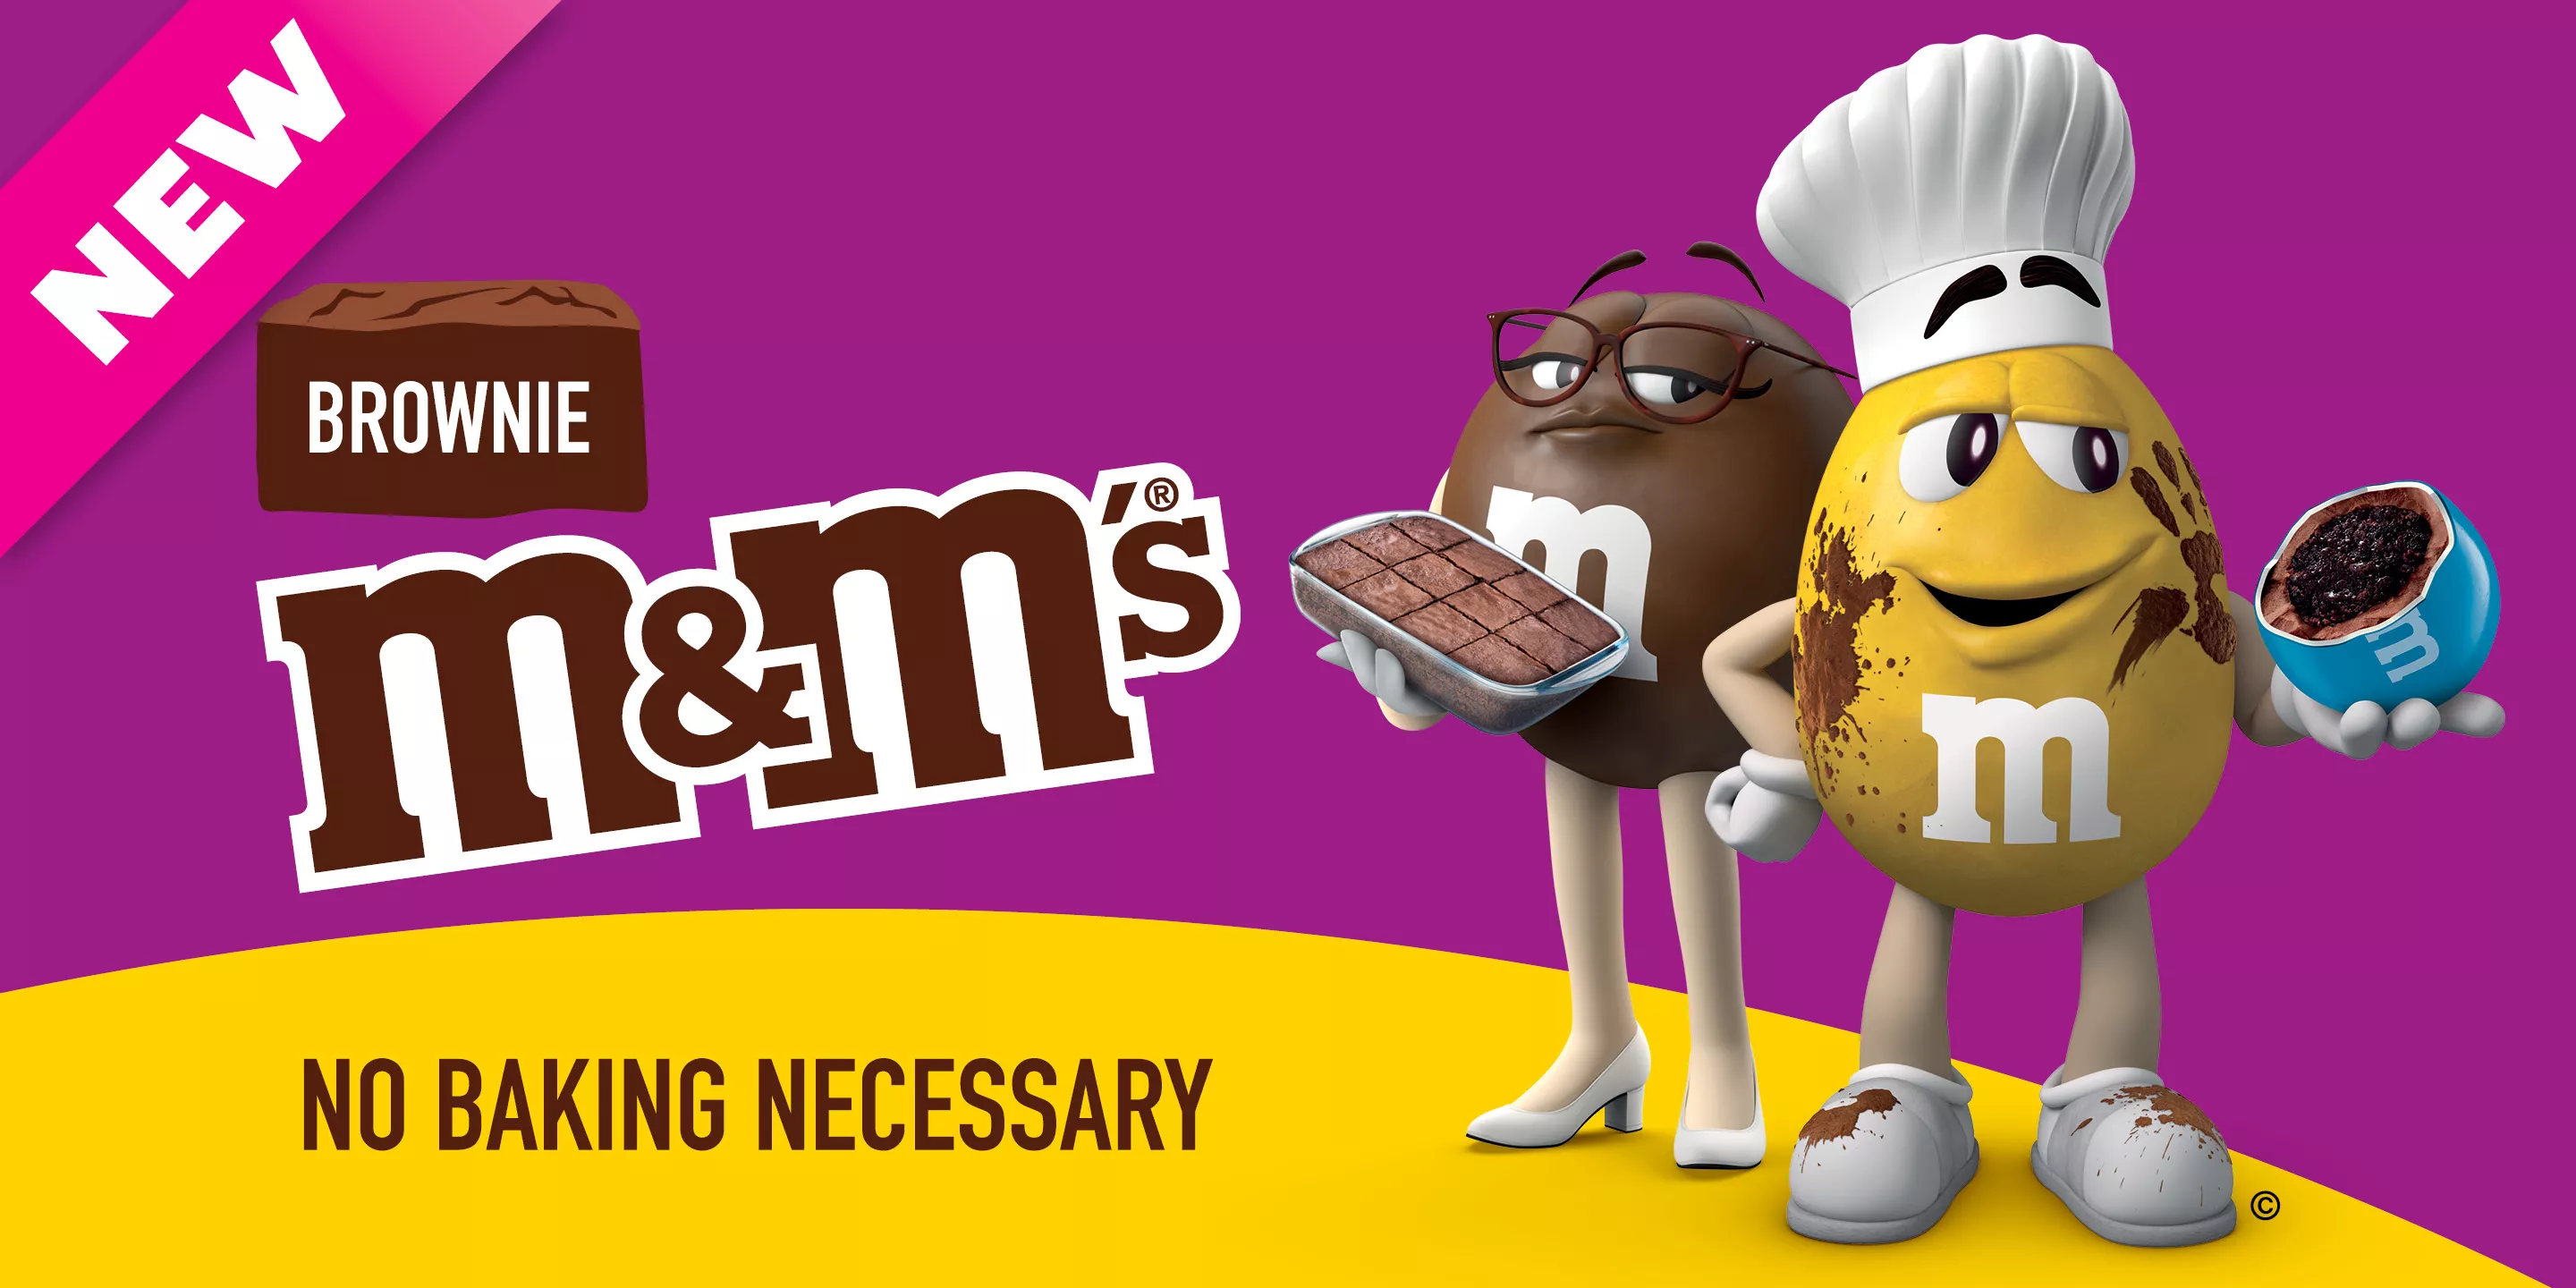 Buy M&Ms Mix Ups Milk Chocolate Share Bag 335g